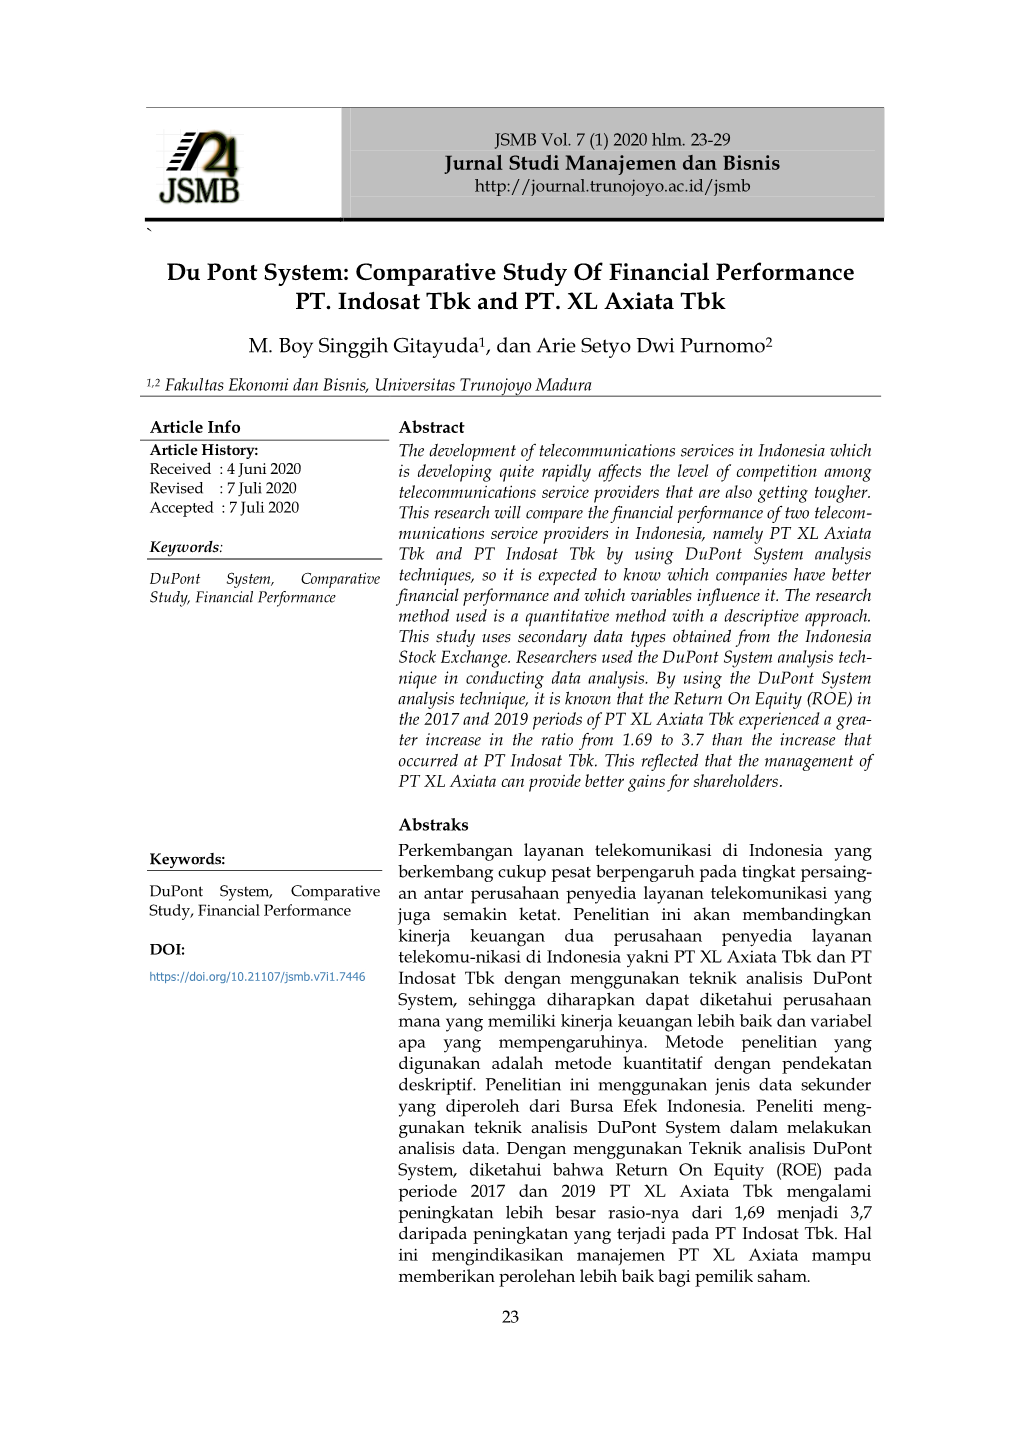 Du Pont System: Comparative Study of Financial Performance PT